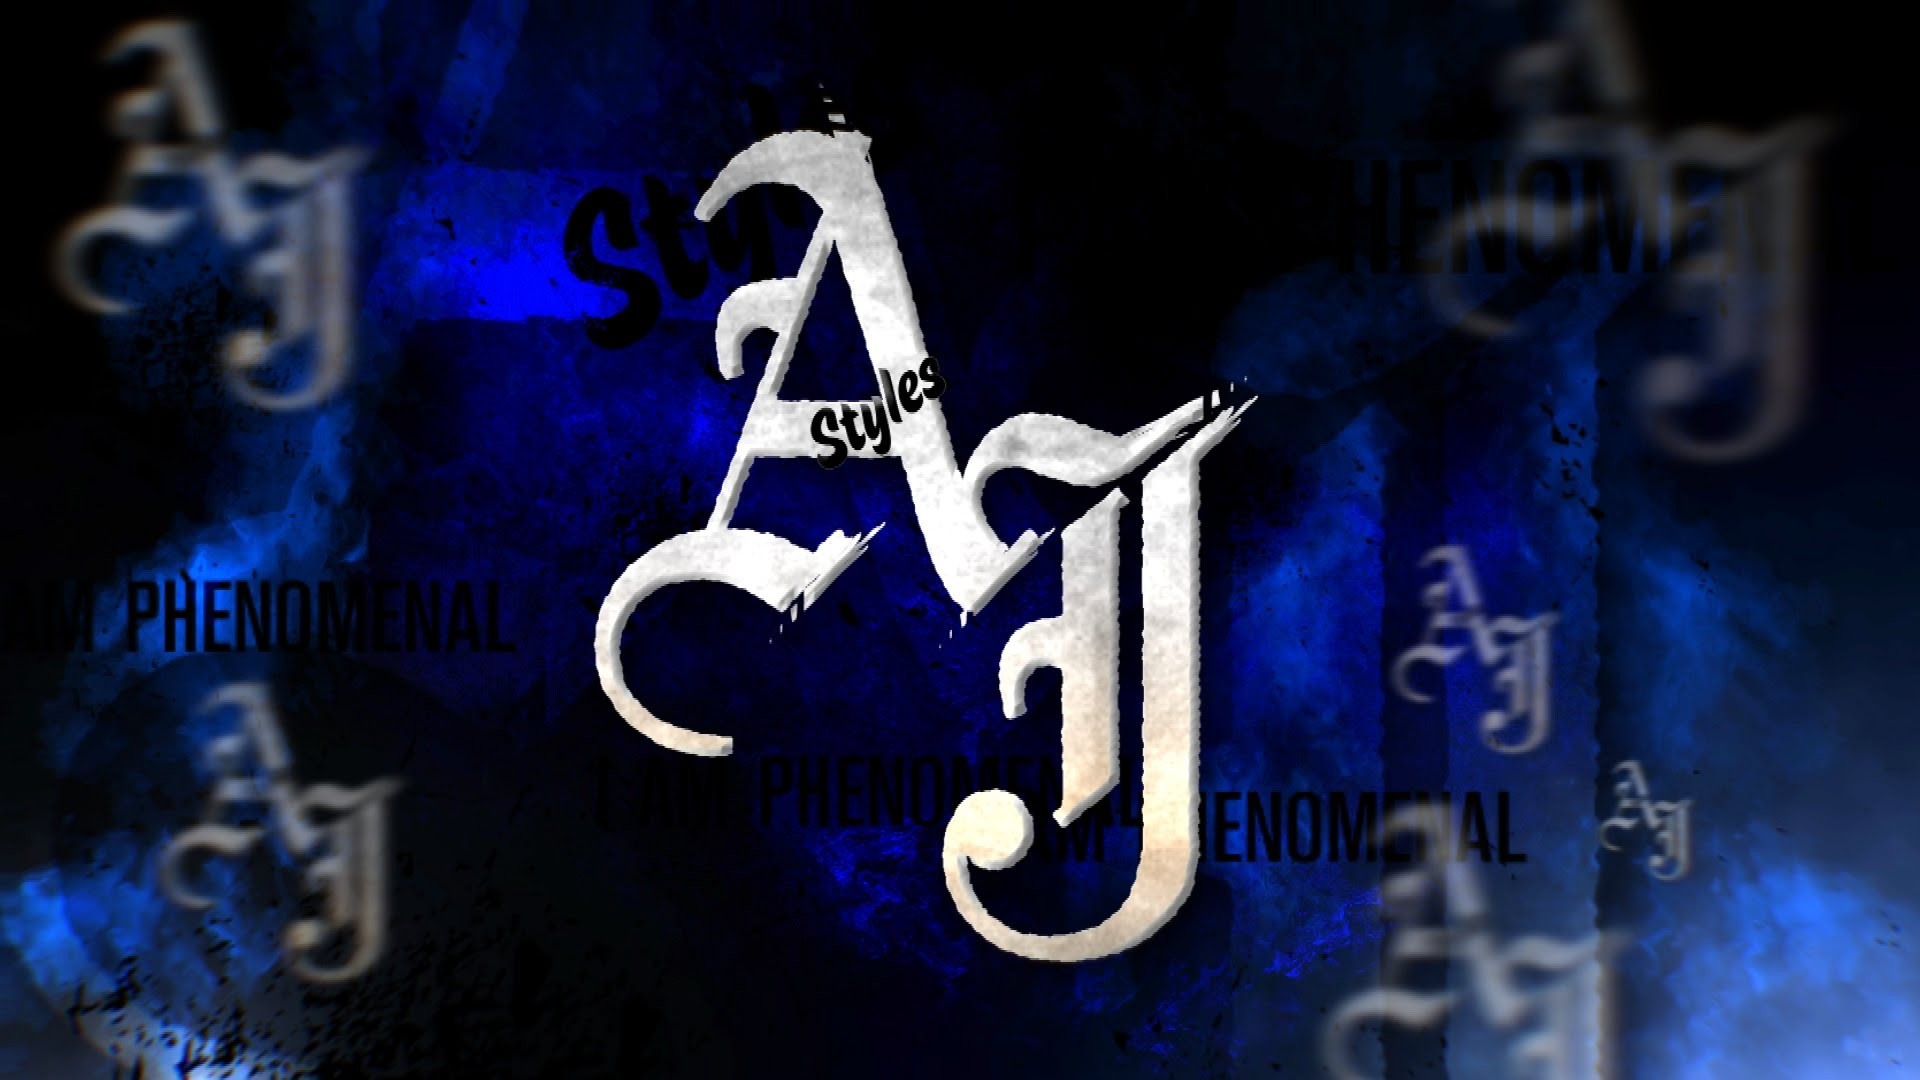  AJ Styles wallpaper Download free cool full HD 